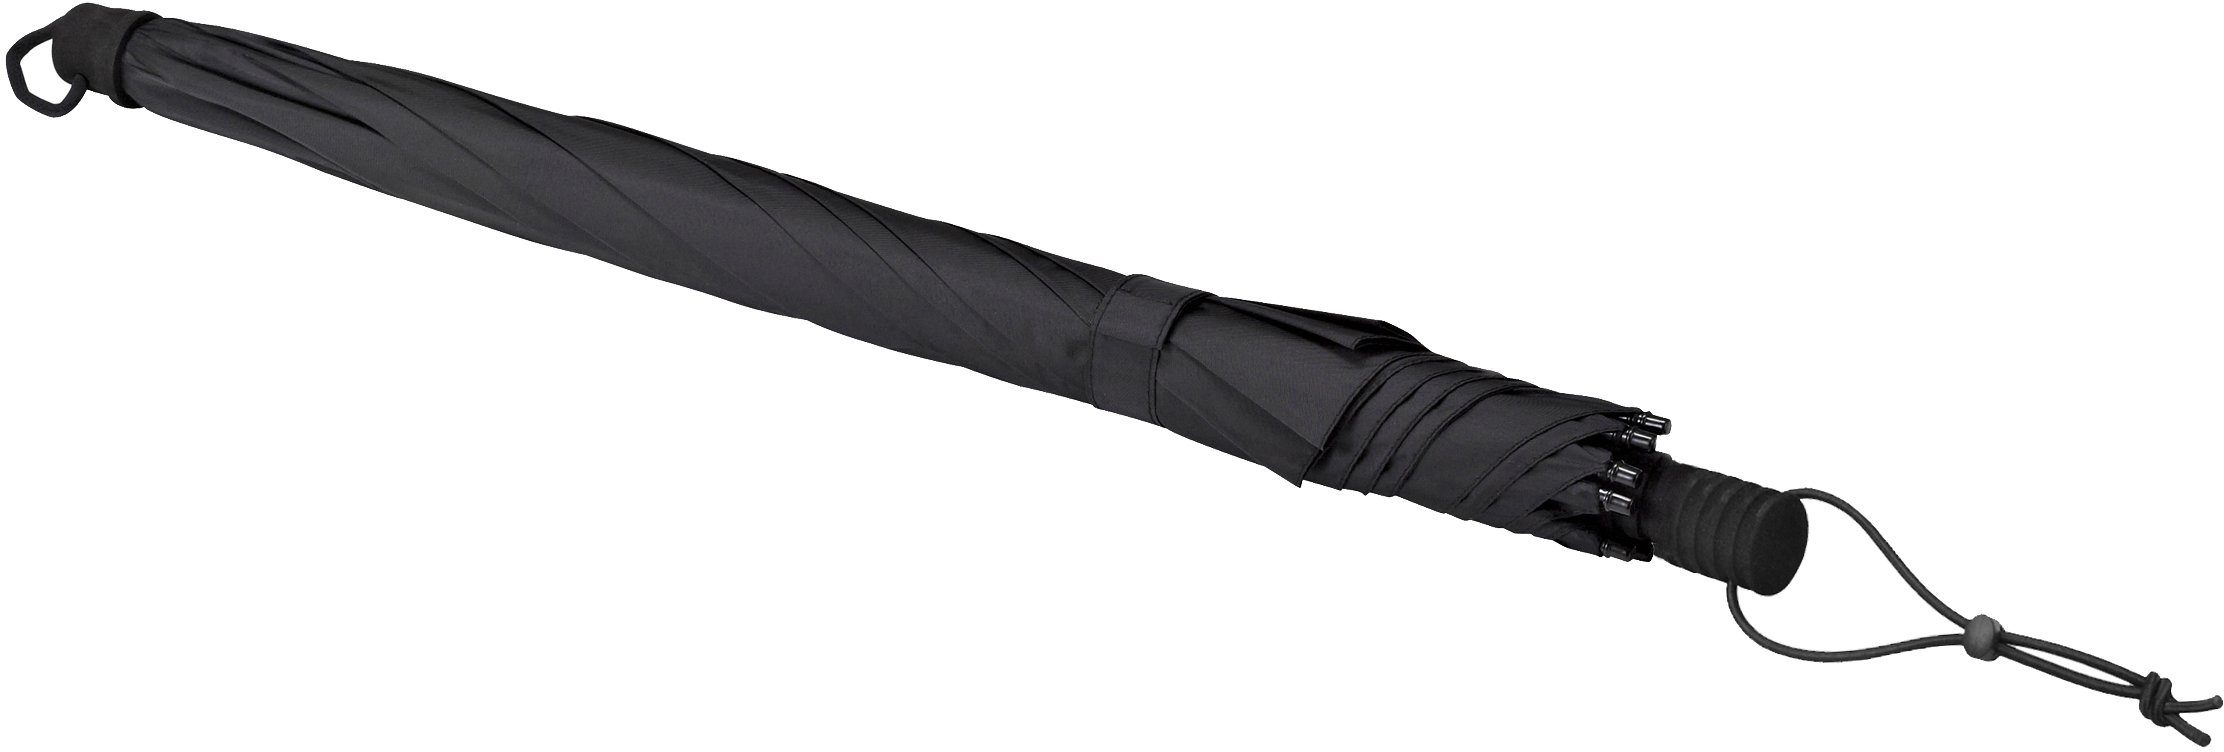 EuroSCHIRM® Stockregenschirm handfrei Swing schwarz, tragbar handsfree